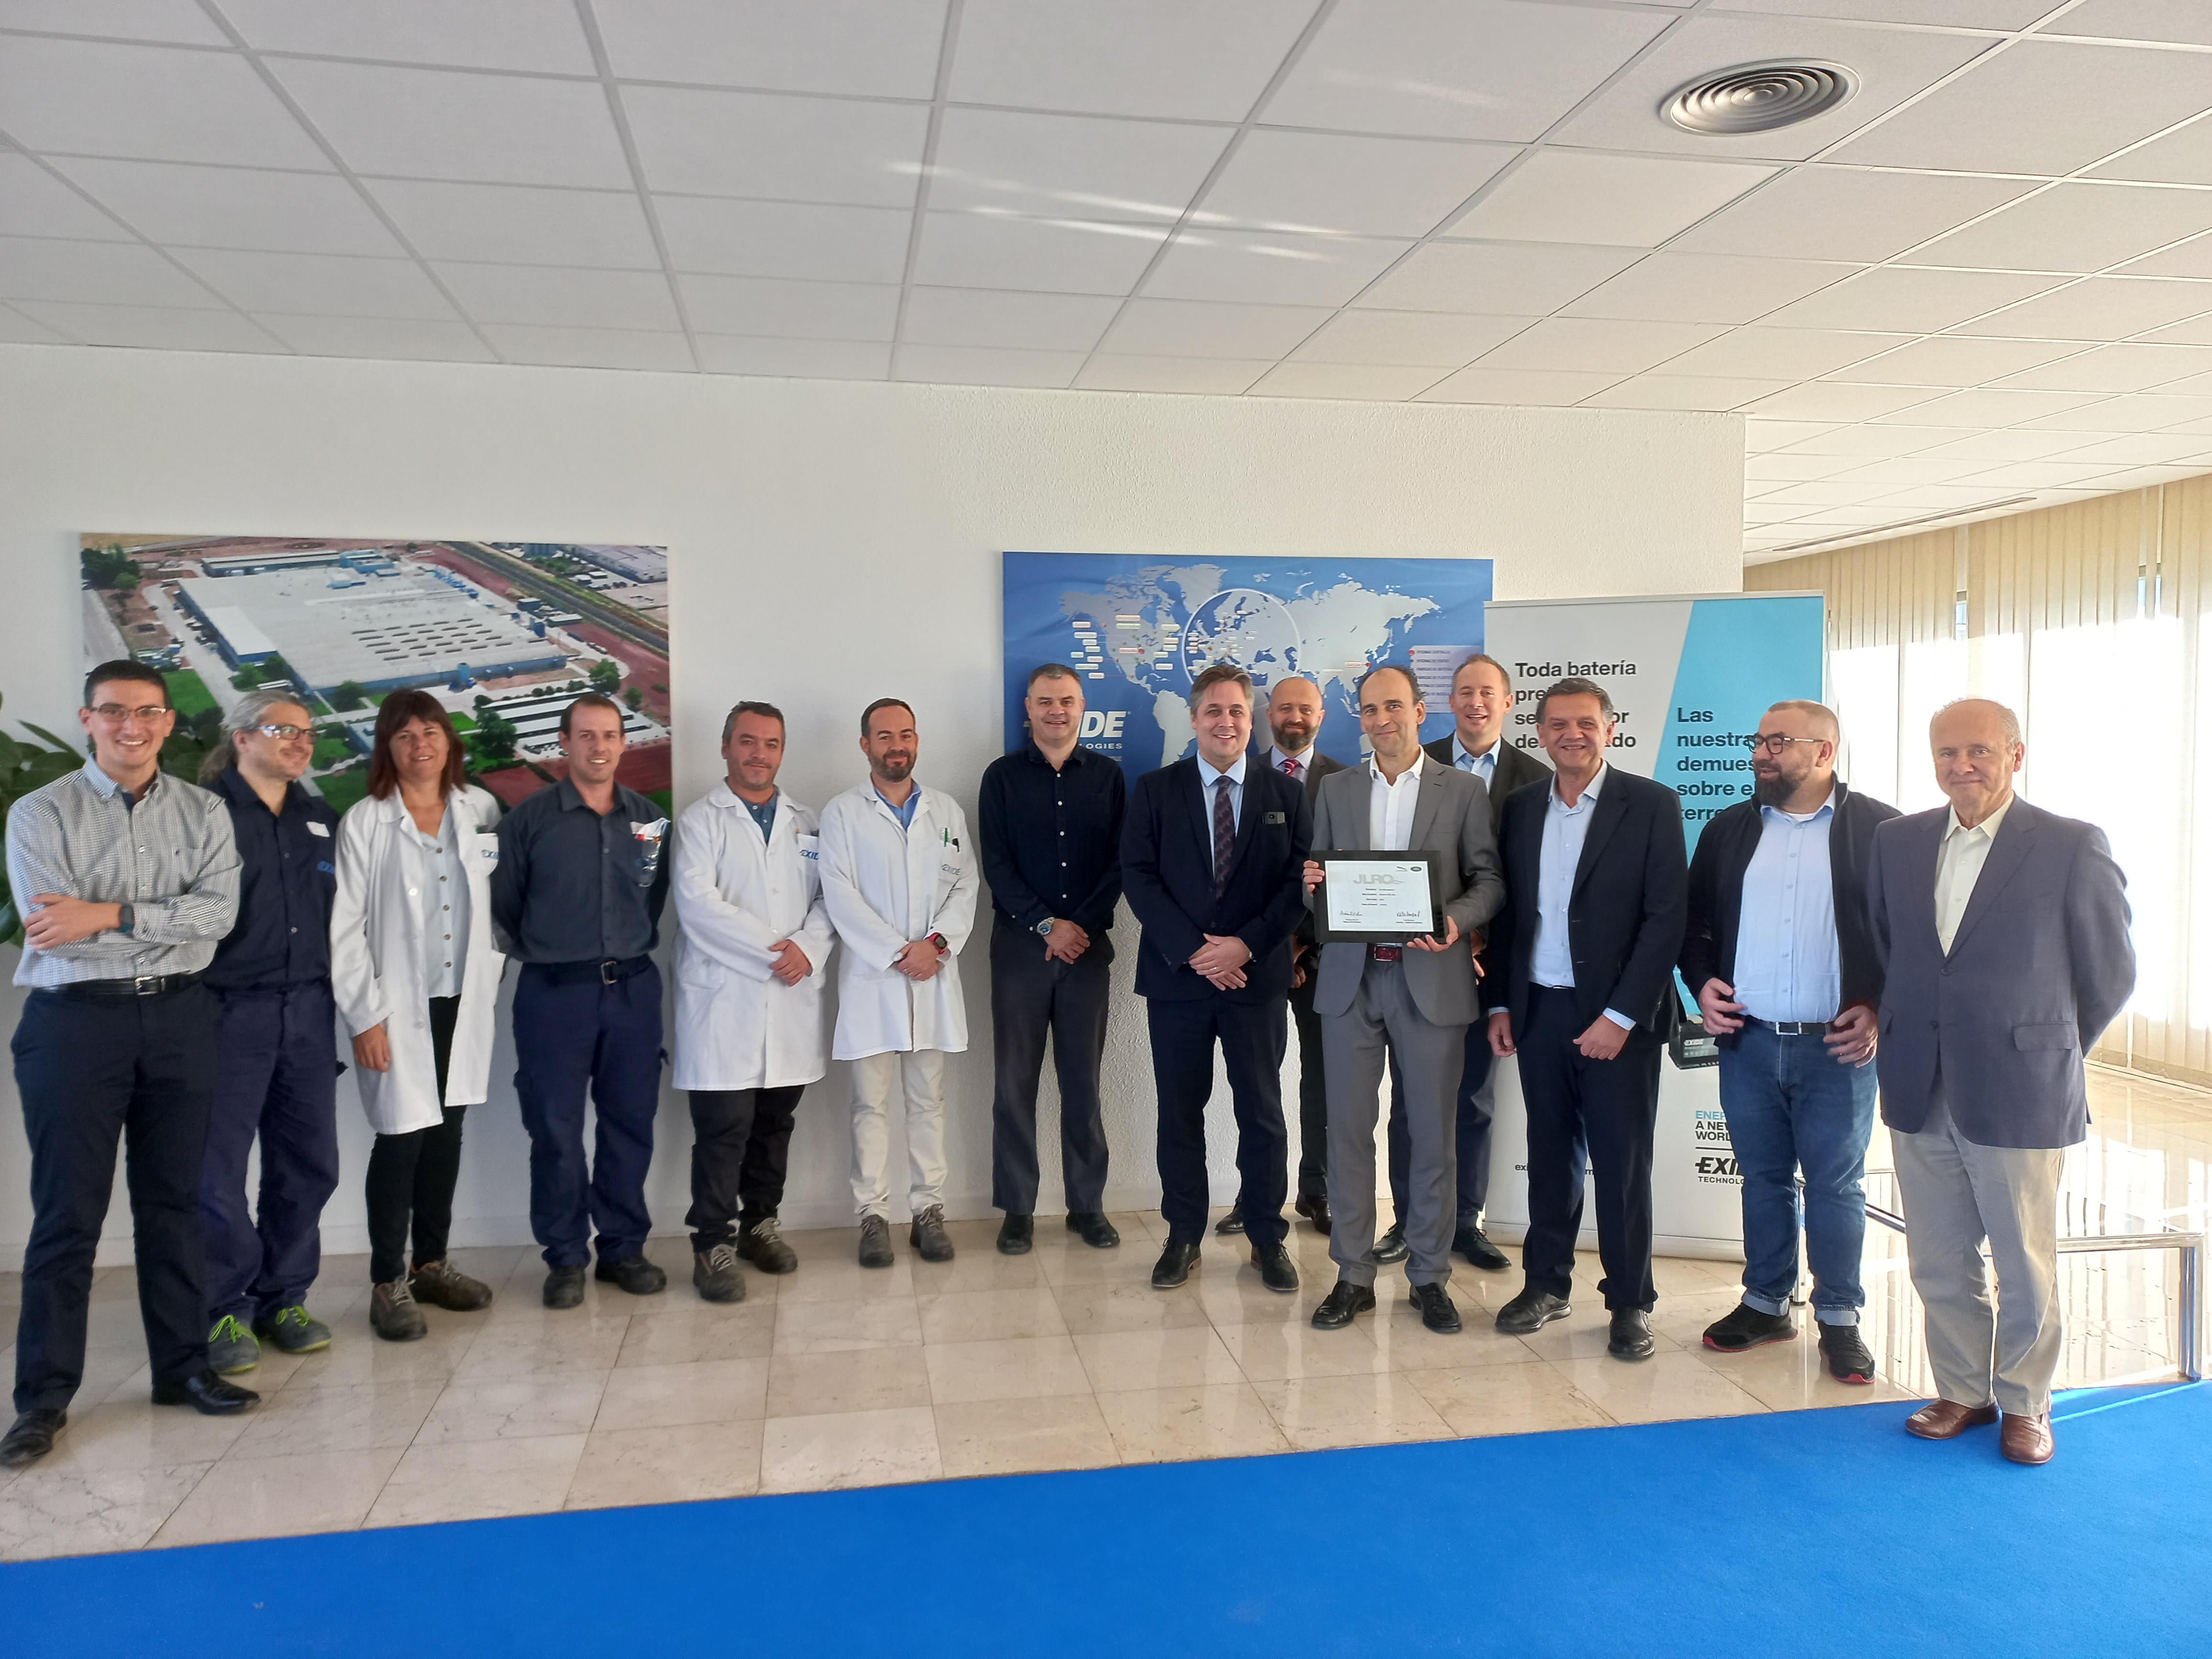 Exide’s Manzanares plant receives prestigious JLRQ award for supplier quality from our long-standing OEM customer Jaguar Land Rover